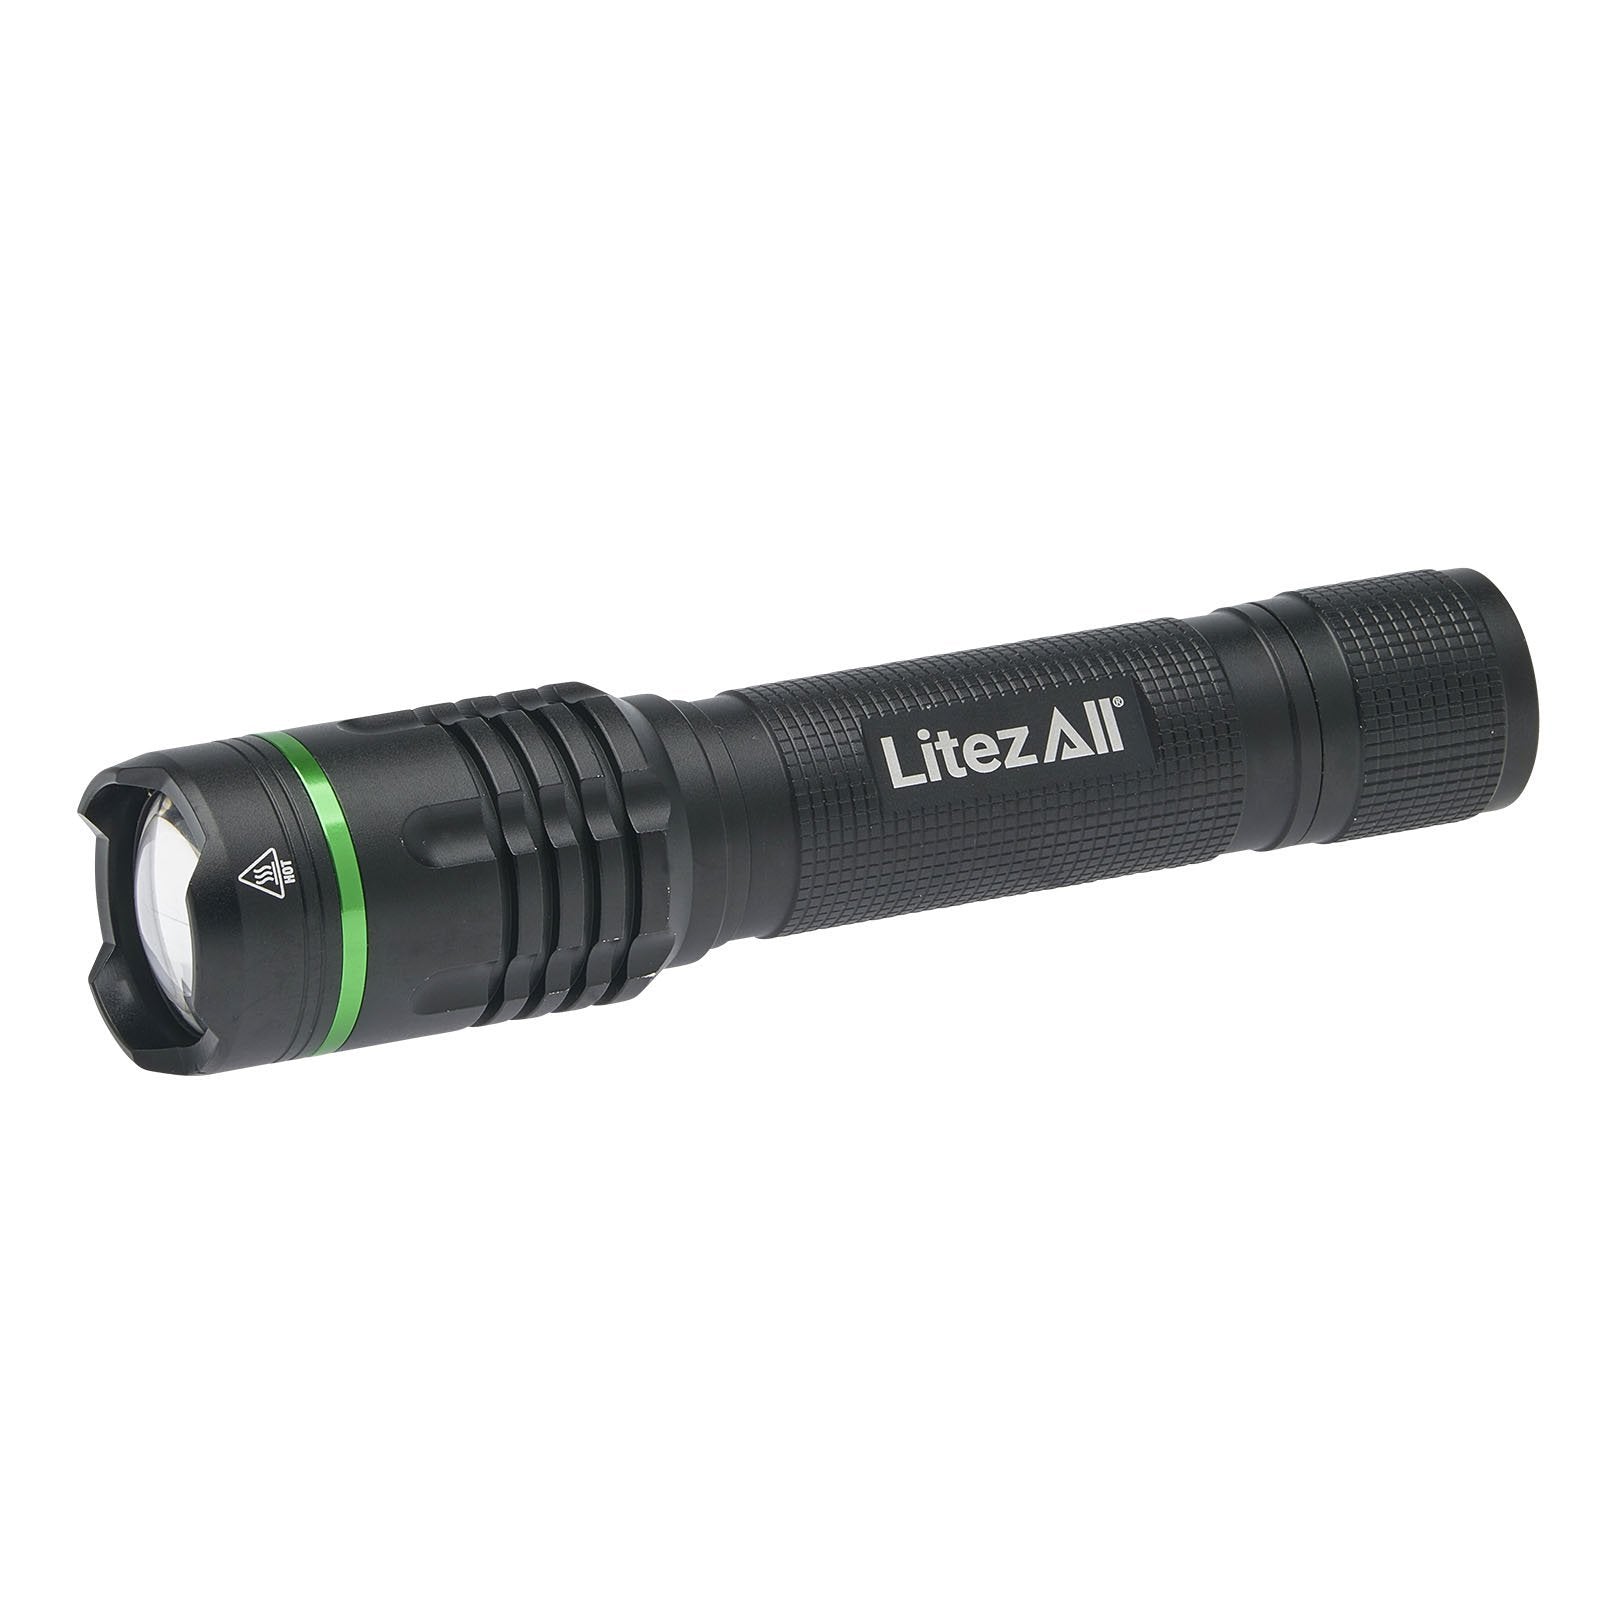 LitezAll Thin Rechargeable 1000 Lumen Tactical Flashlight - LitezAll - Tactical Flashlights - 1